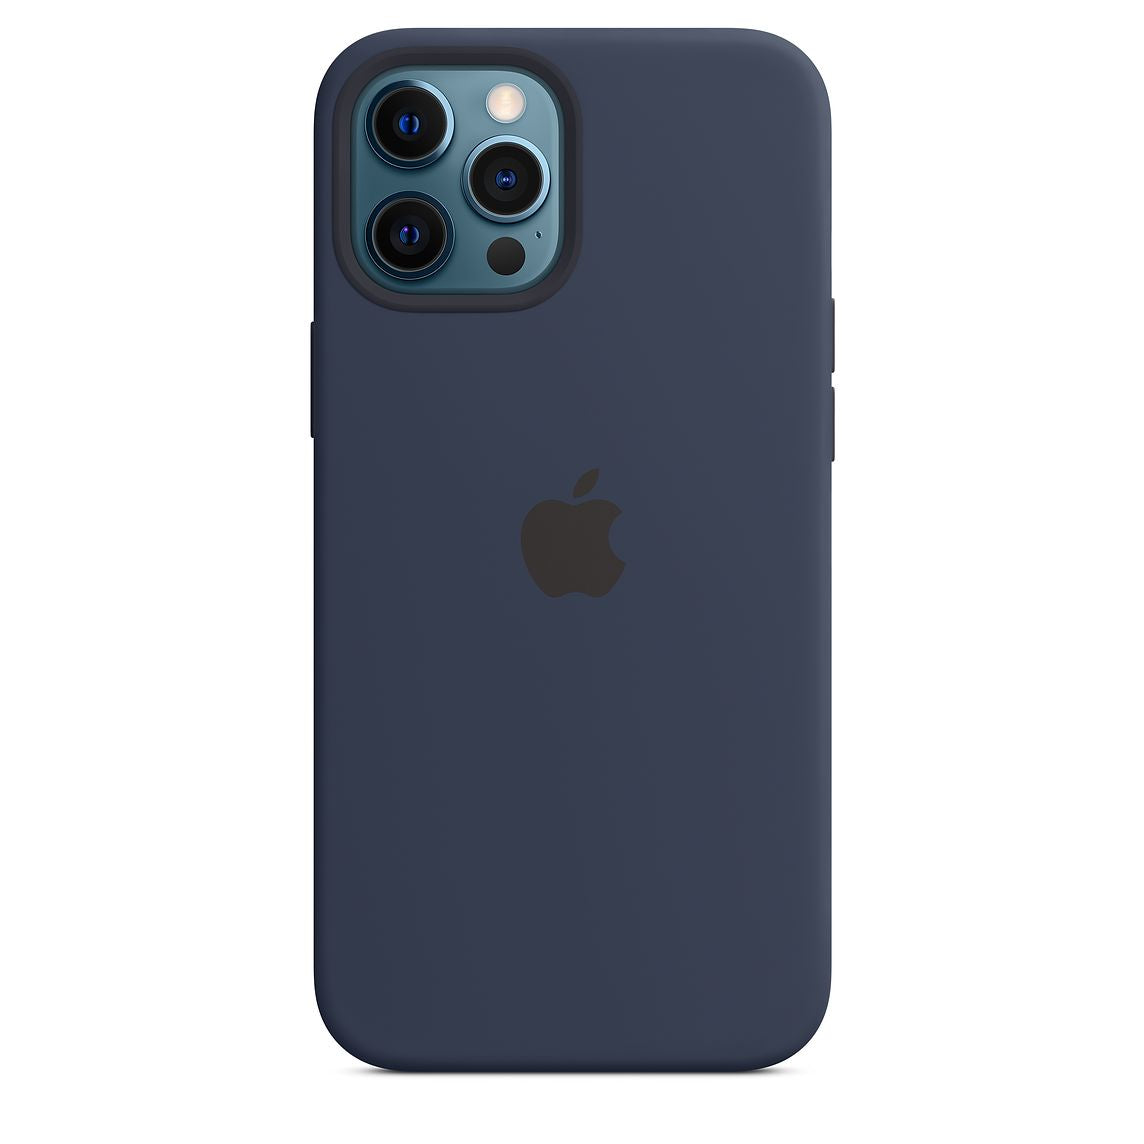 Carcasa silicona iPhone 12 pro max Azul Marino